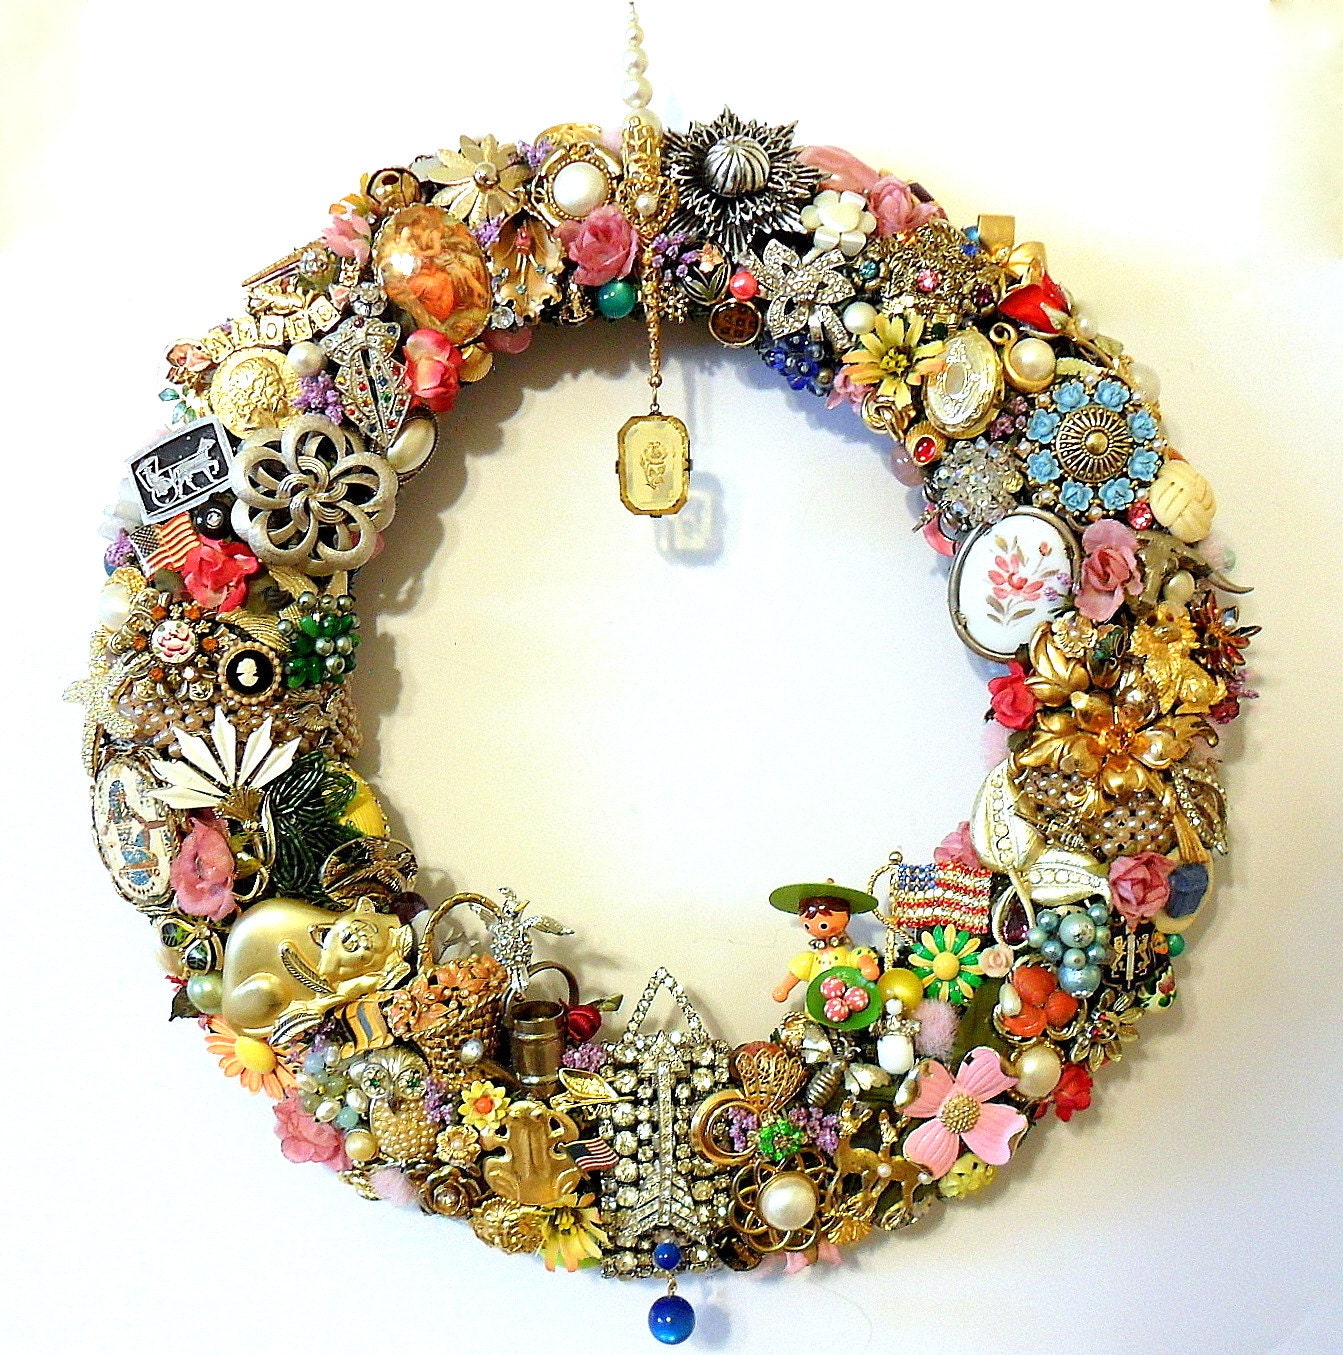 Handmade Vintage Jewelry Wreath Spring or Summer